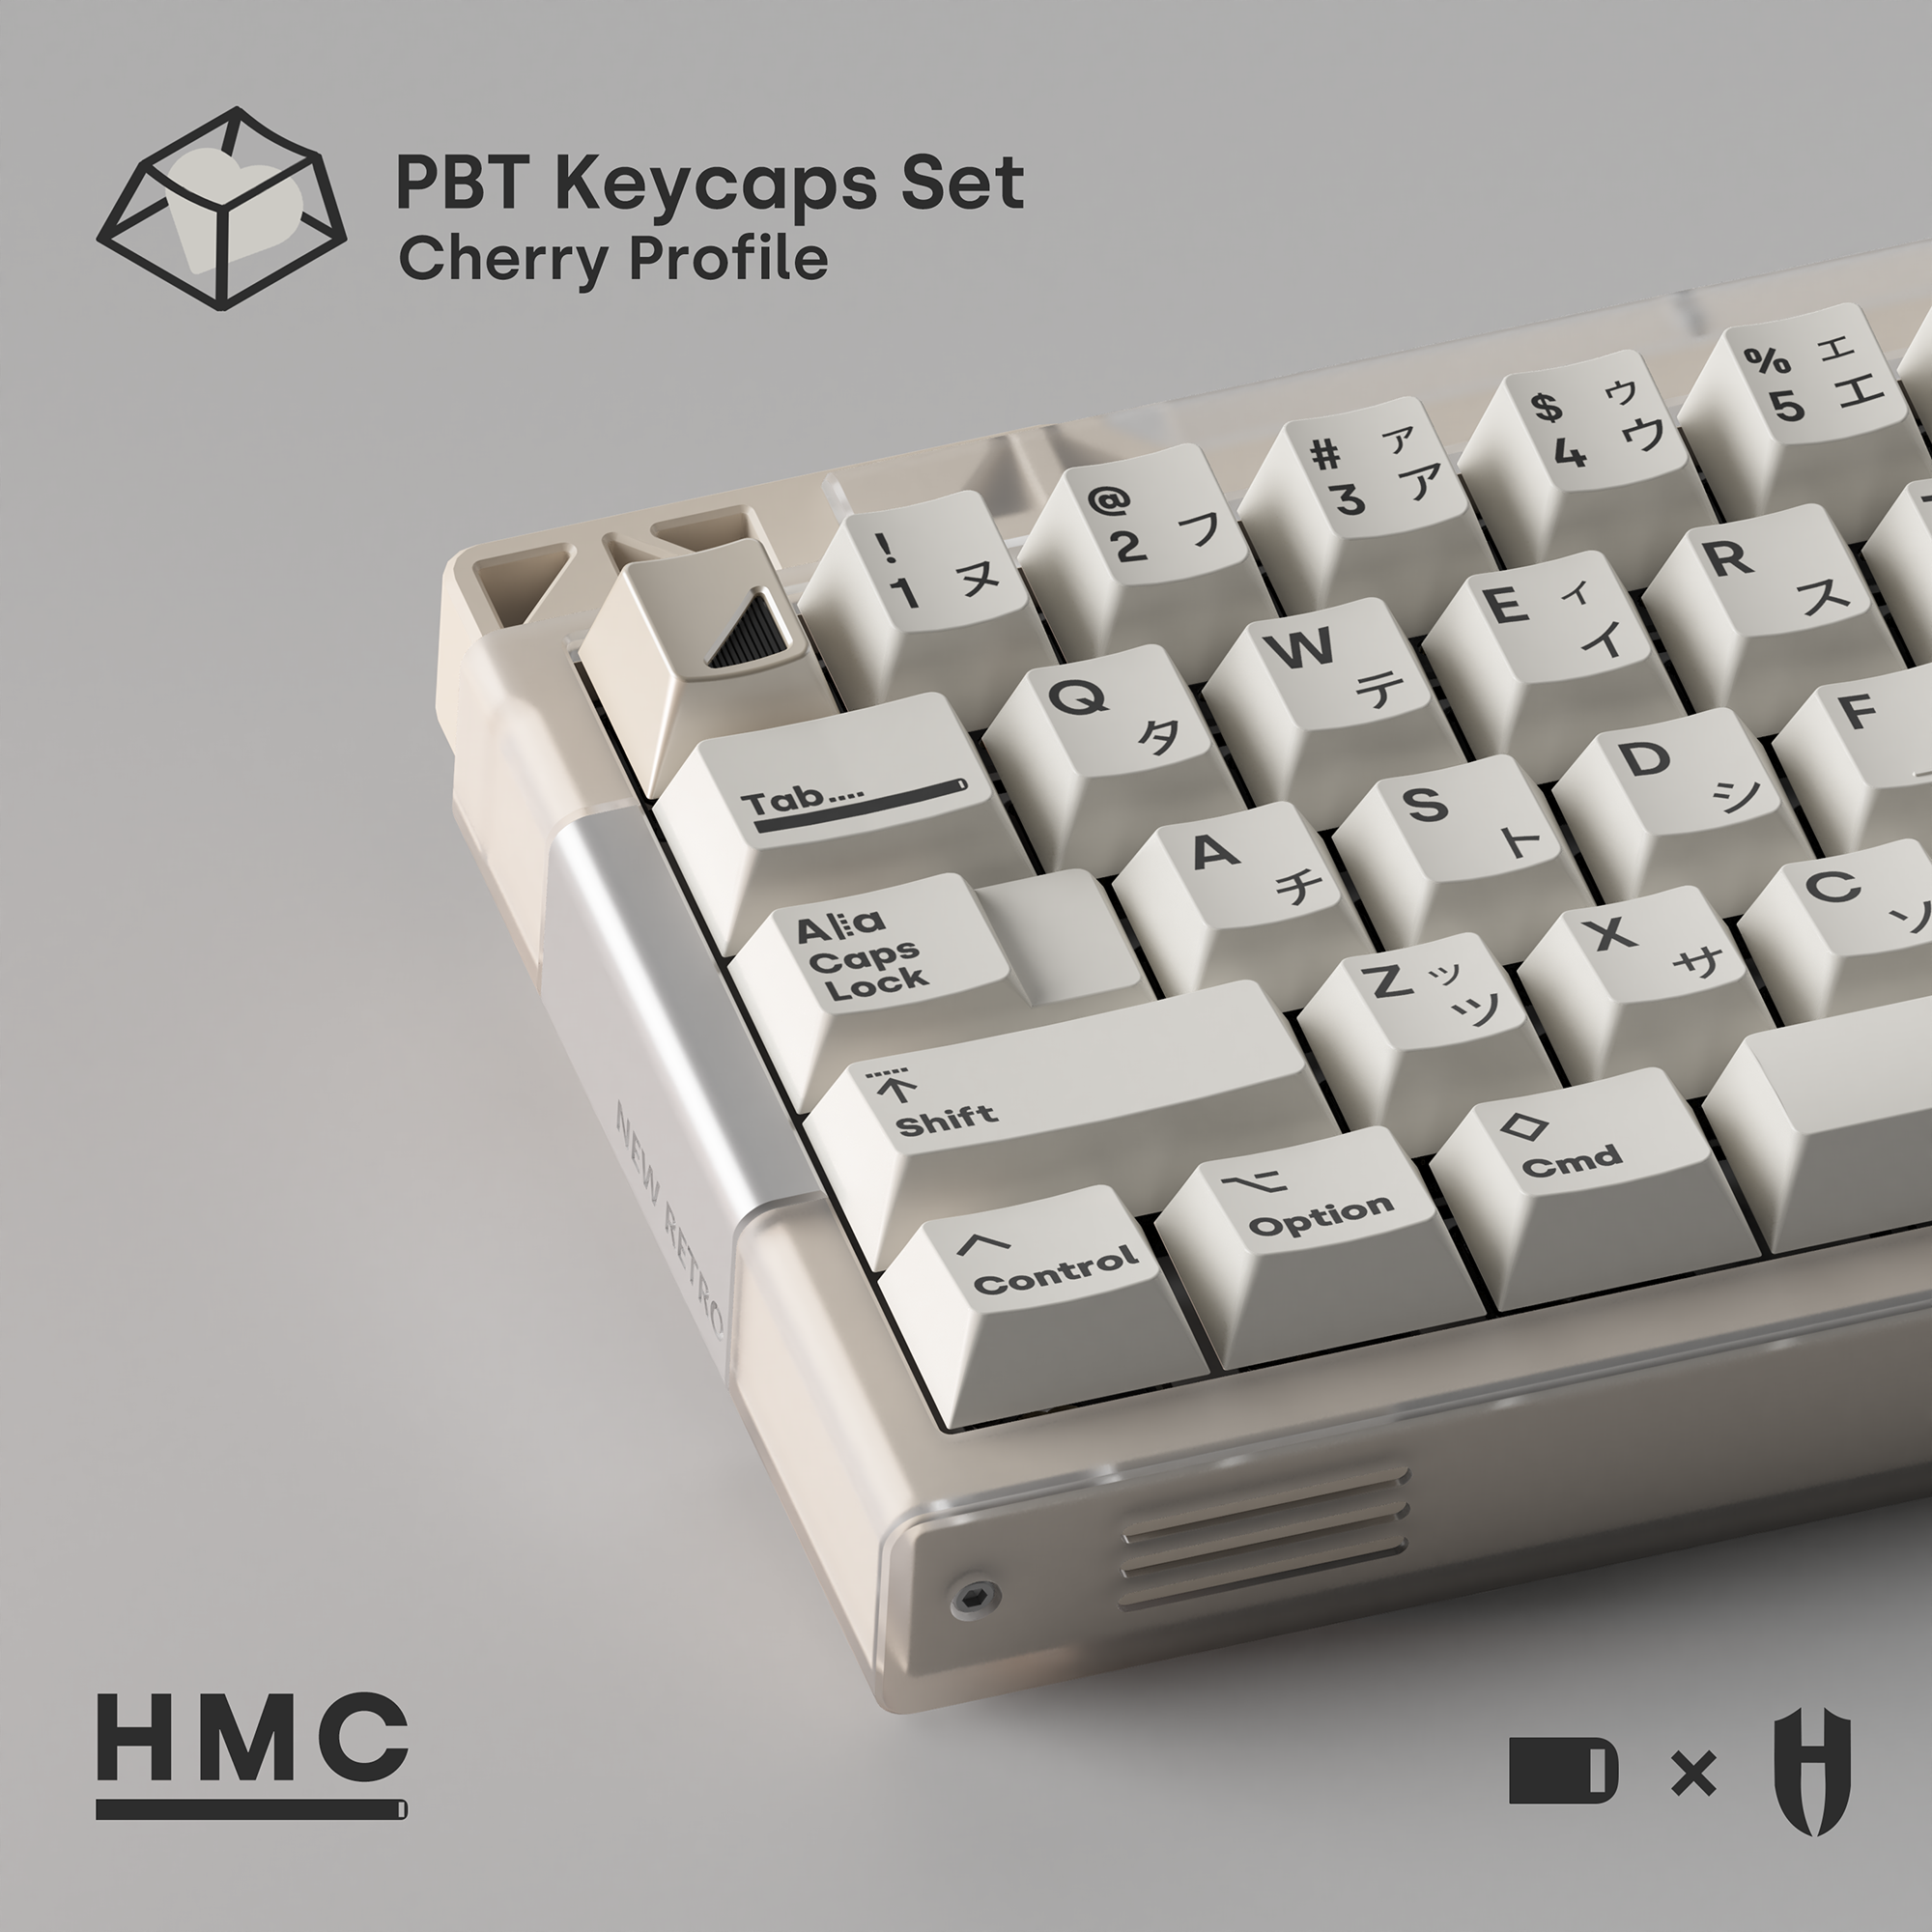 Group-Buy Group-Buy Deadline Studio X Hammer Works - HMC PBT Keycaps